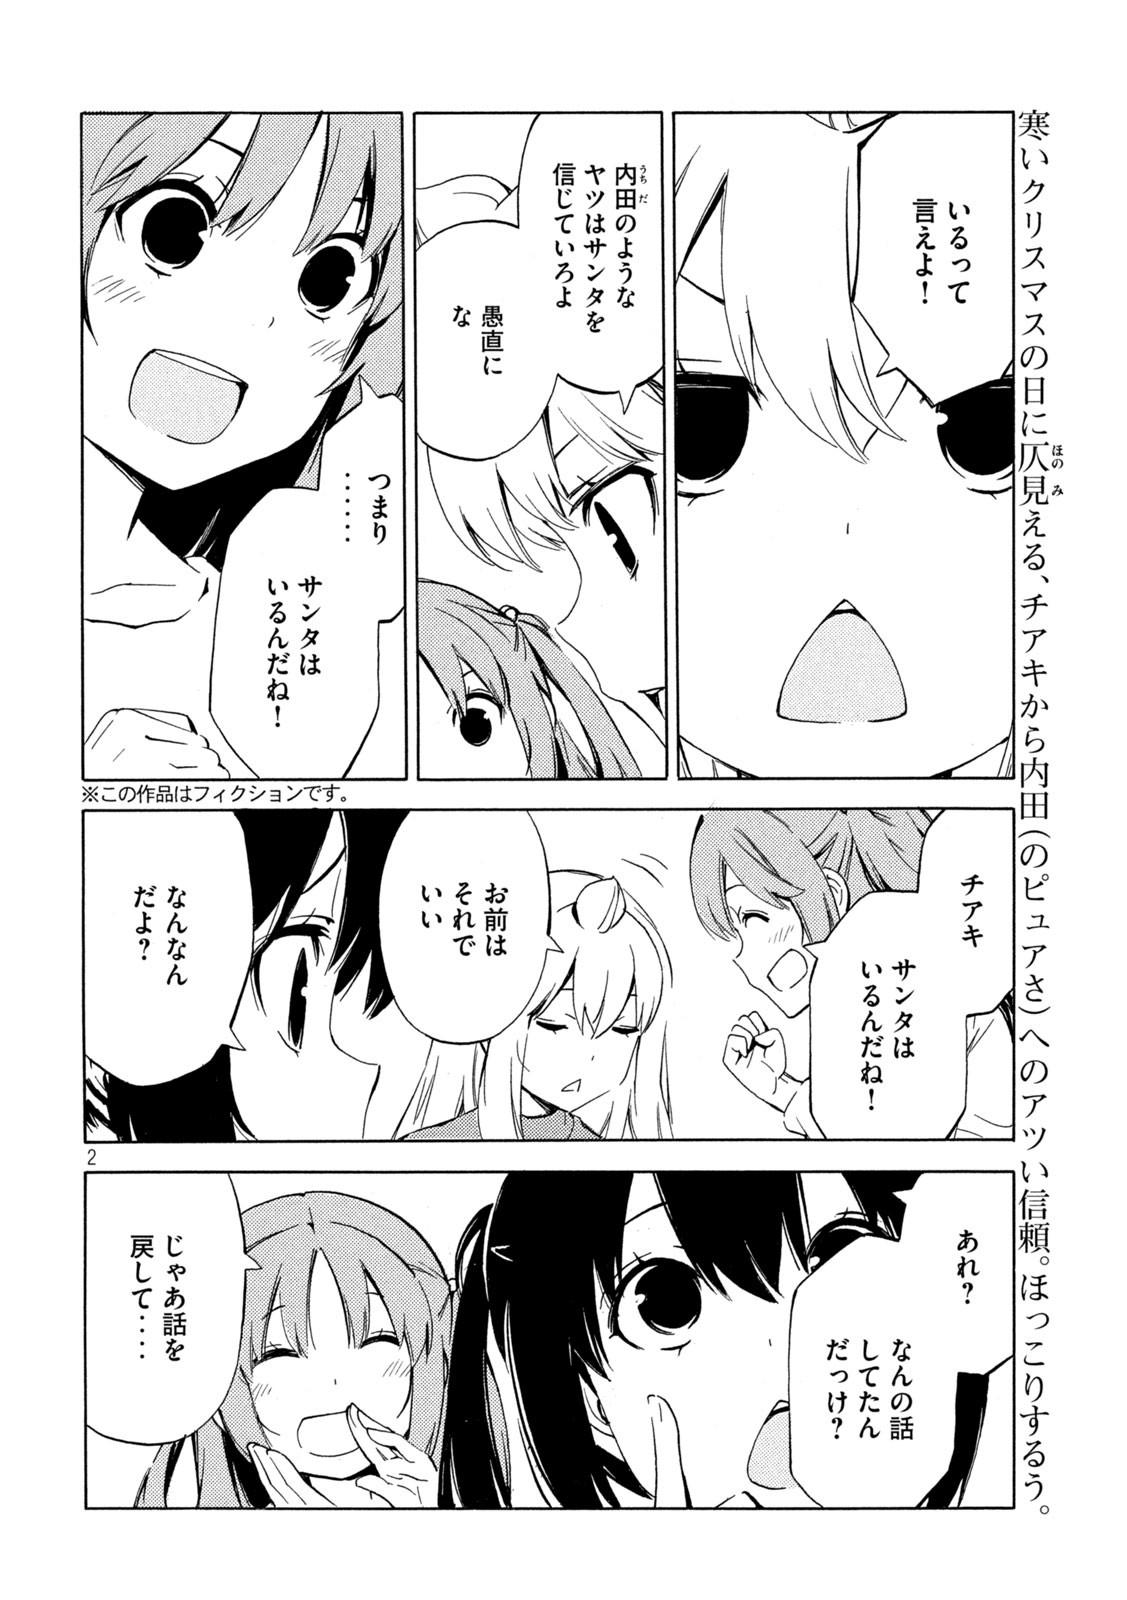 Minami-ke - Chapter 475 - Page 2